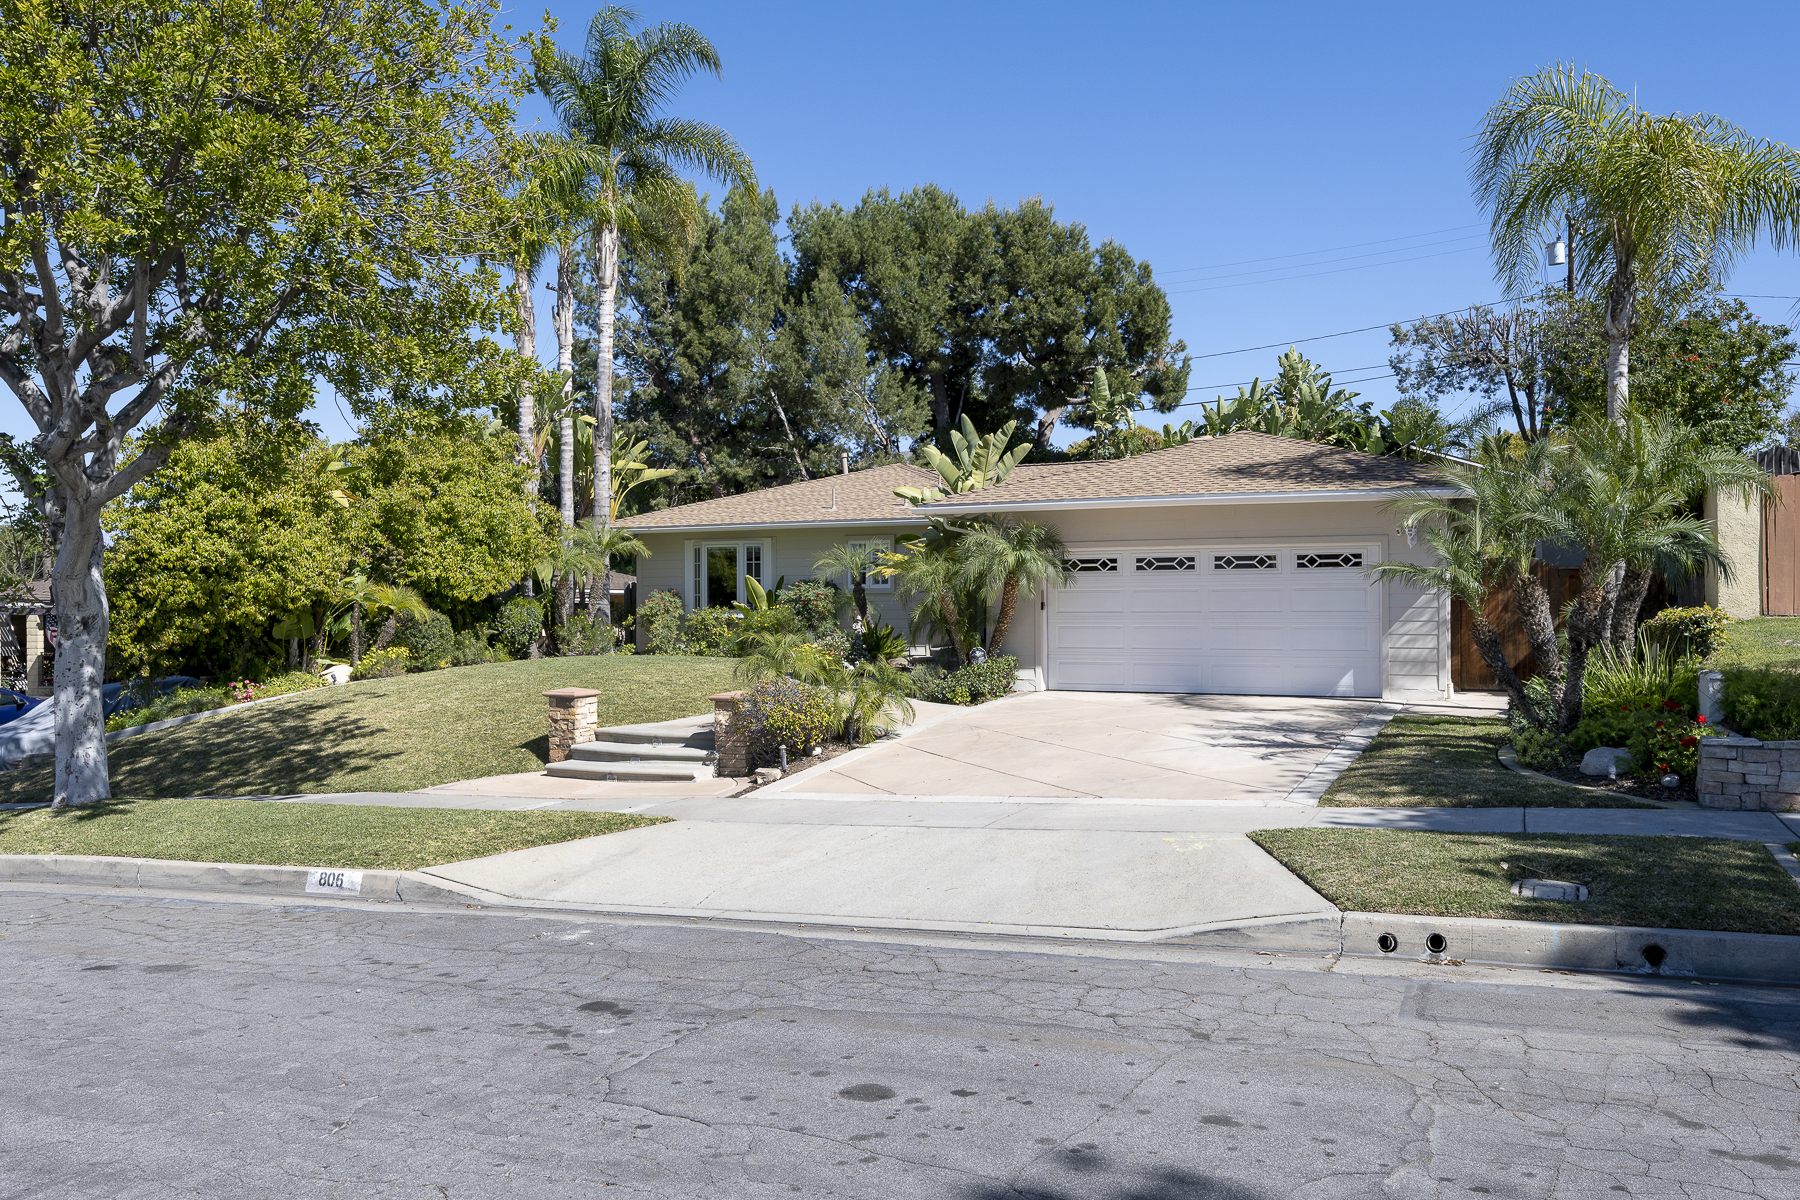 806 N. Adlena Drive, Fullerton, CA 92833: Exterior shot, driveway and garage wide street view.